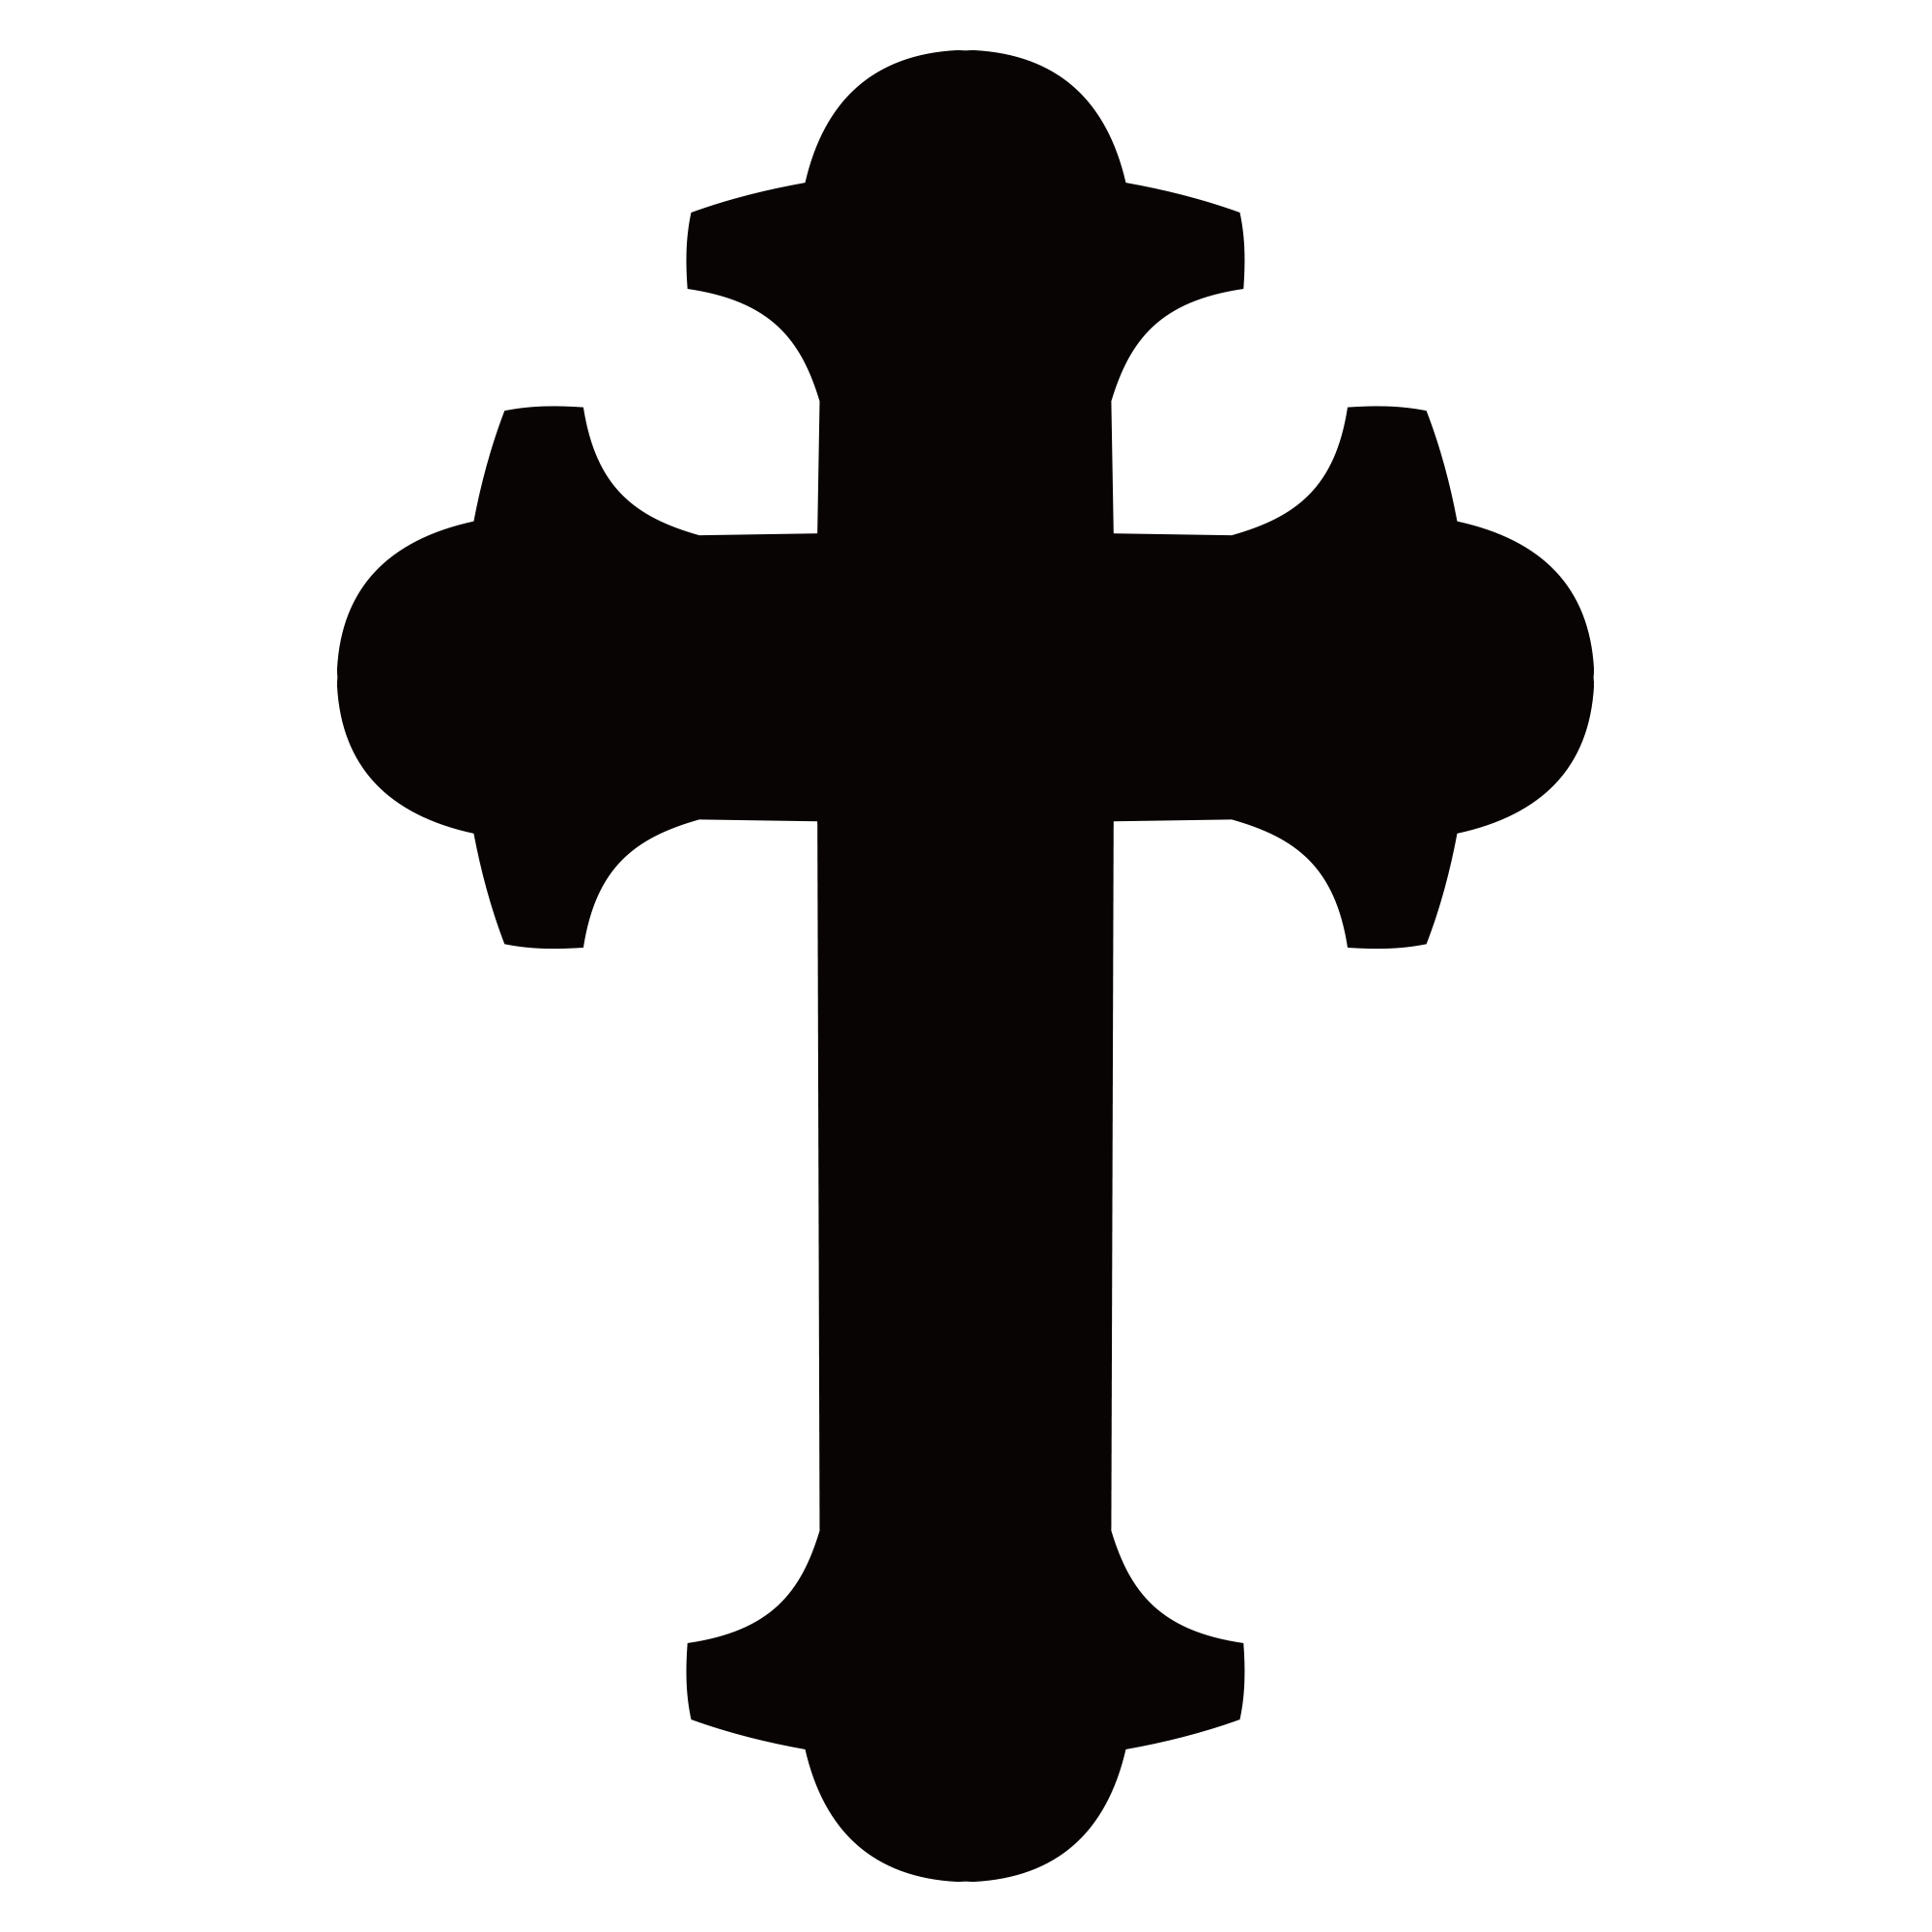 Christian Cross Vector Graphics Clip Art Symbol Amenities Design